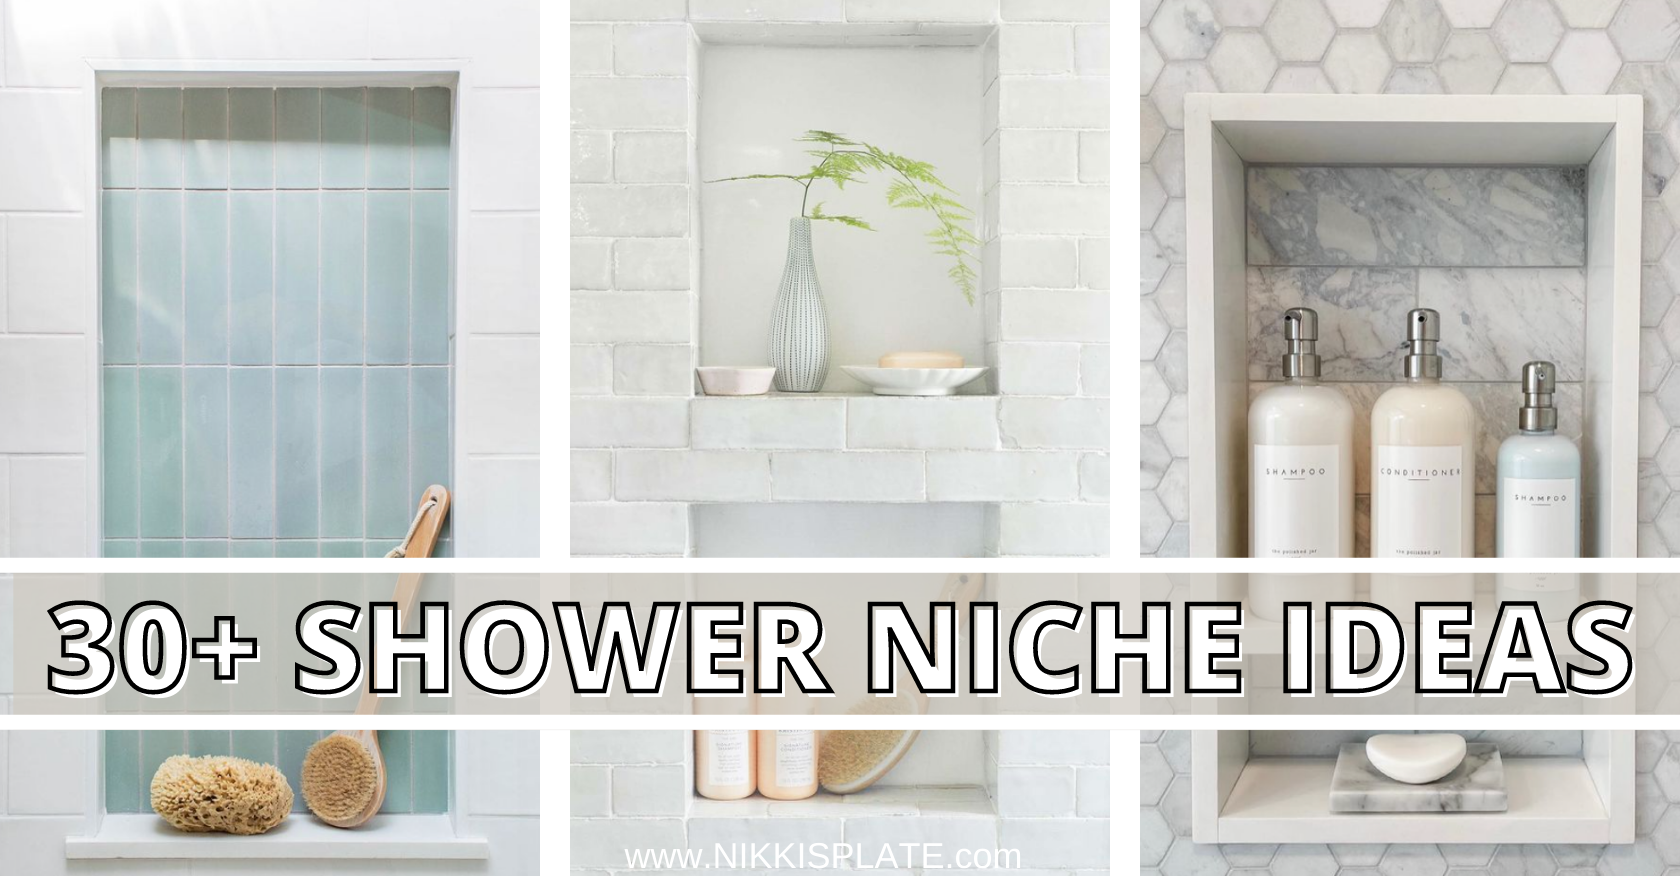 Niches, Ledges, and Floating Shelves: Let's Talk Shower Storage